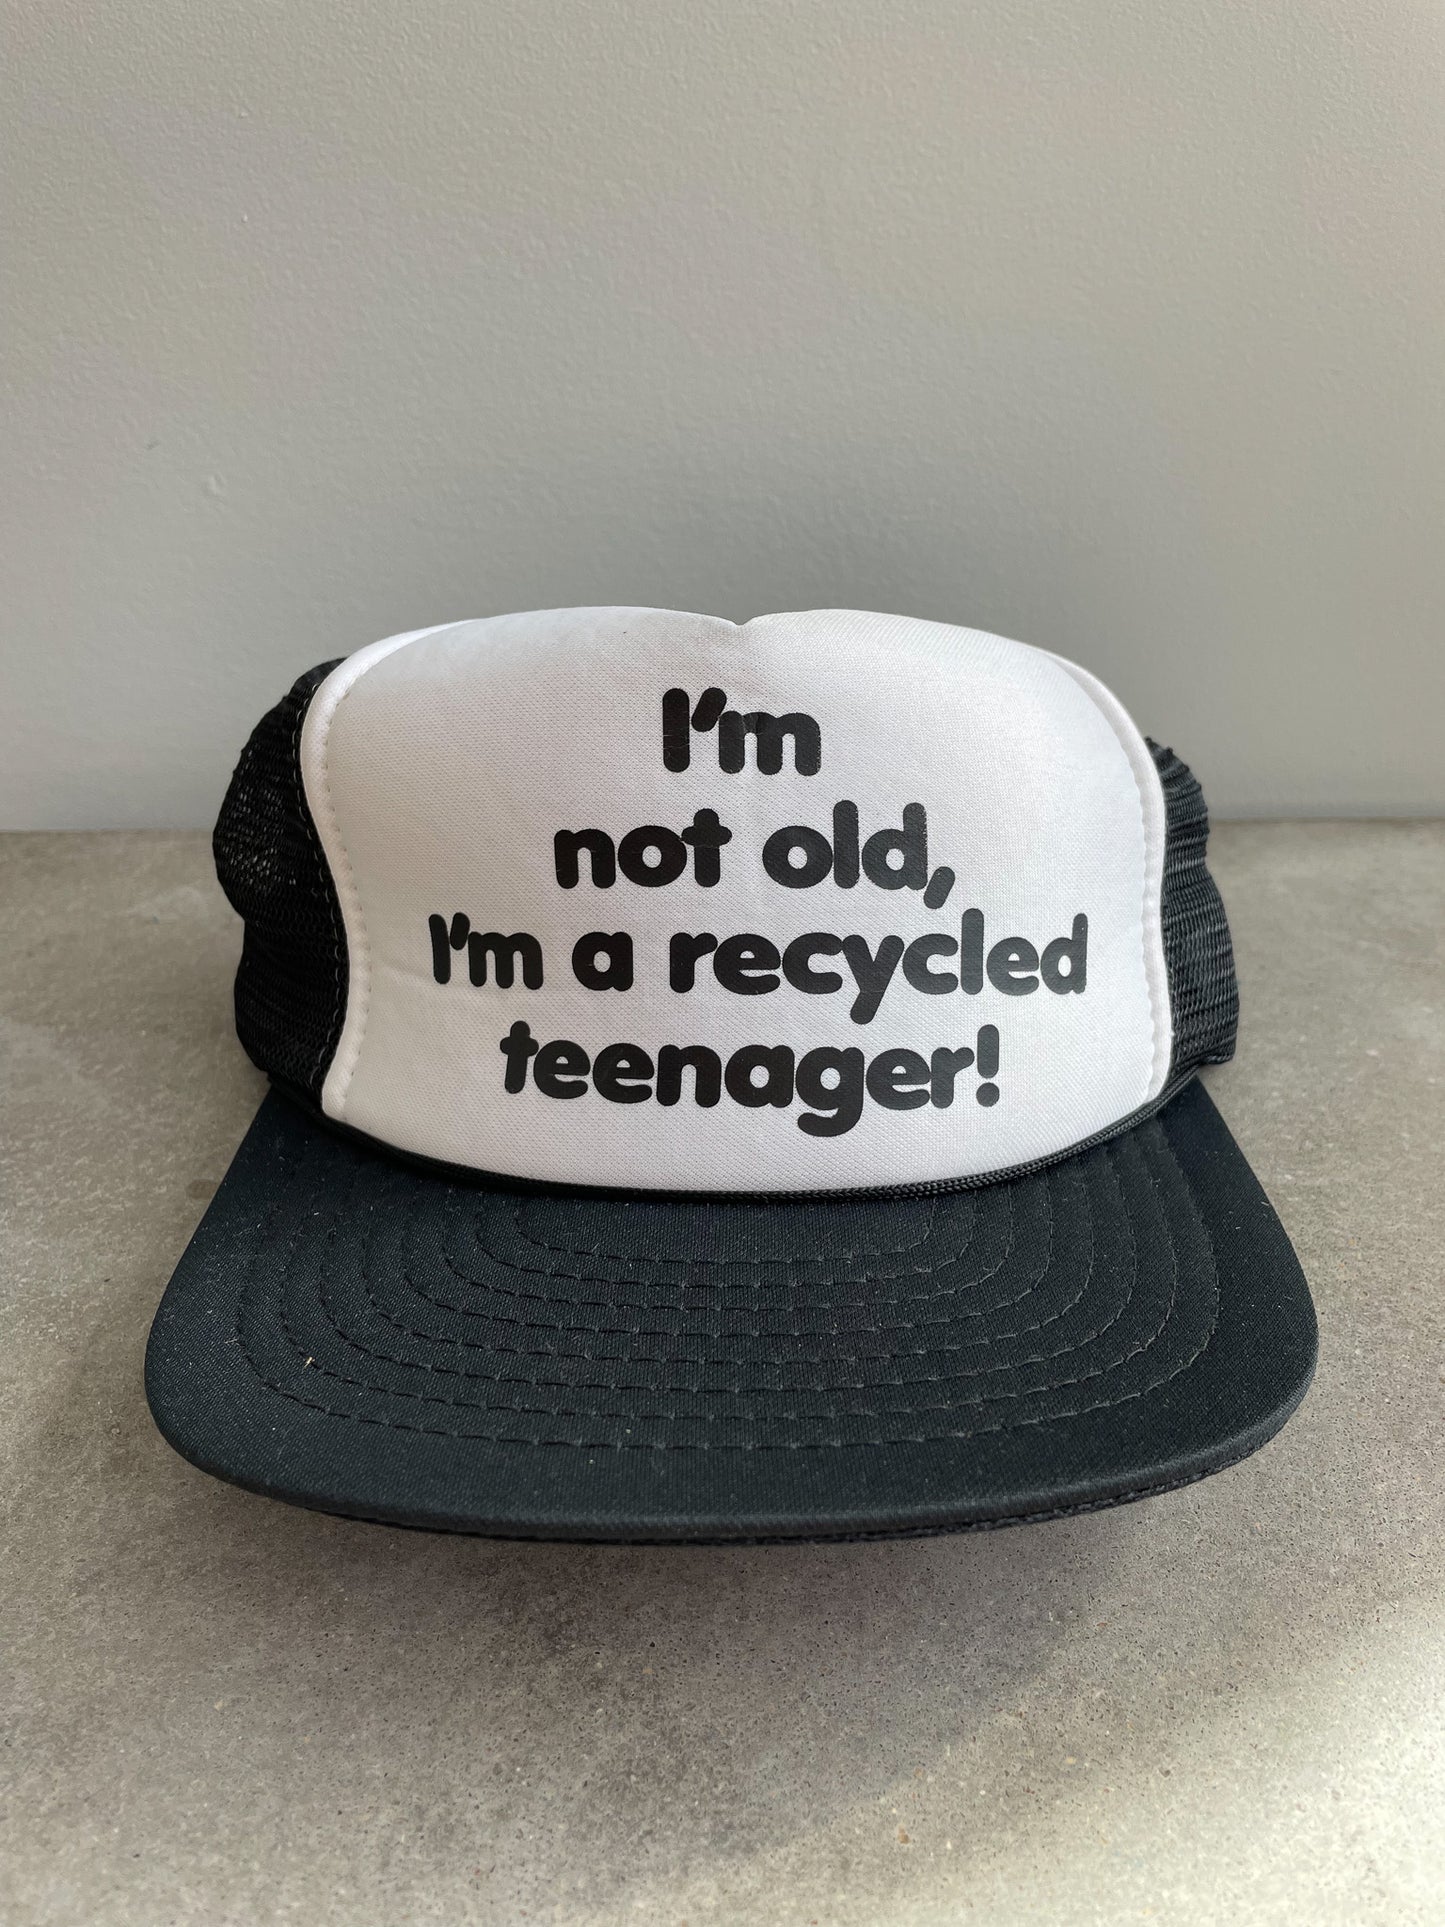 RECYCLED TEENAGER MESHCAP TRUCKER HAT